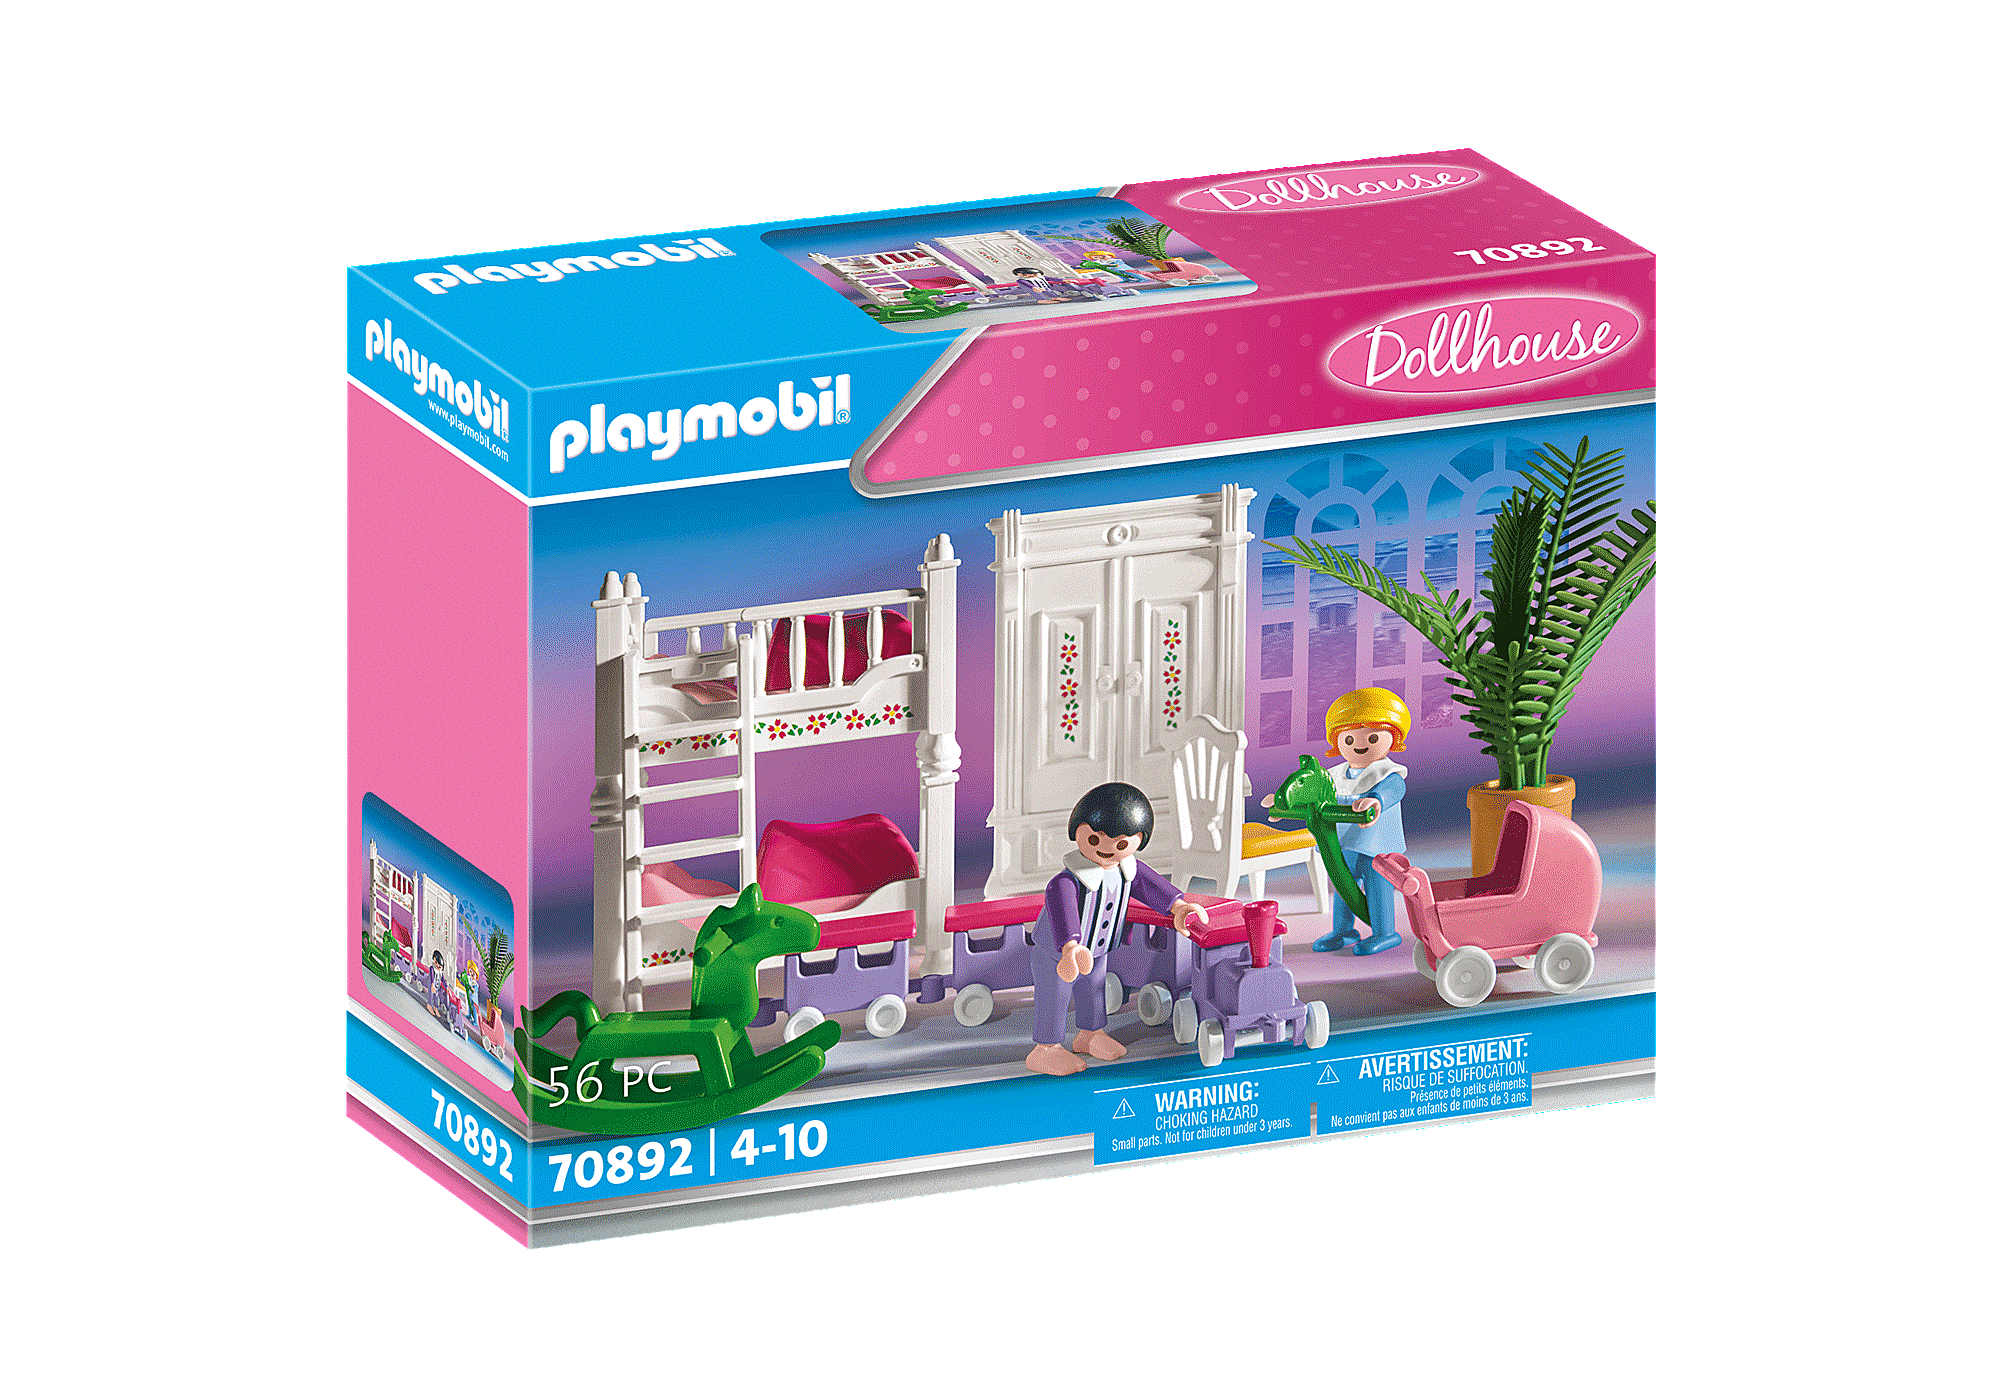 Playmobil chambre enfant - Playmobil